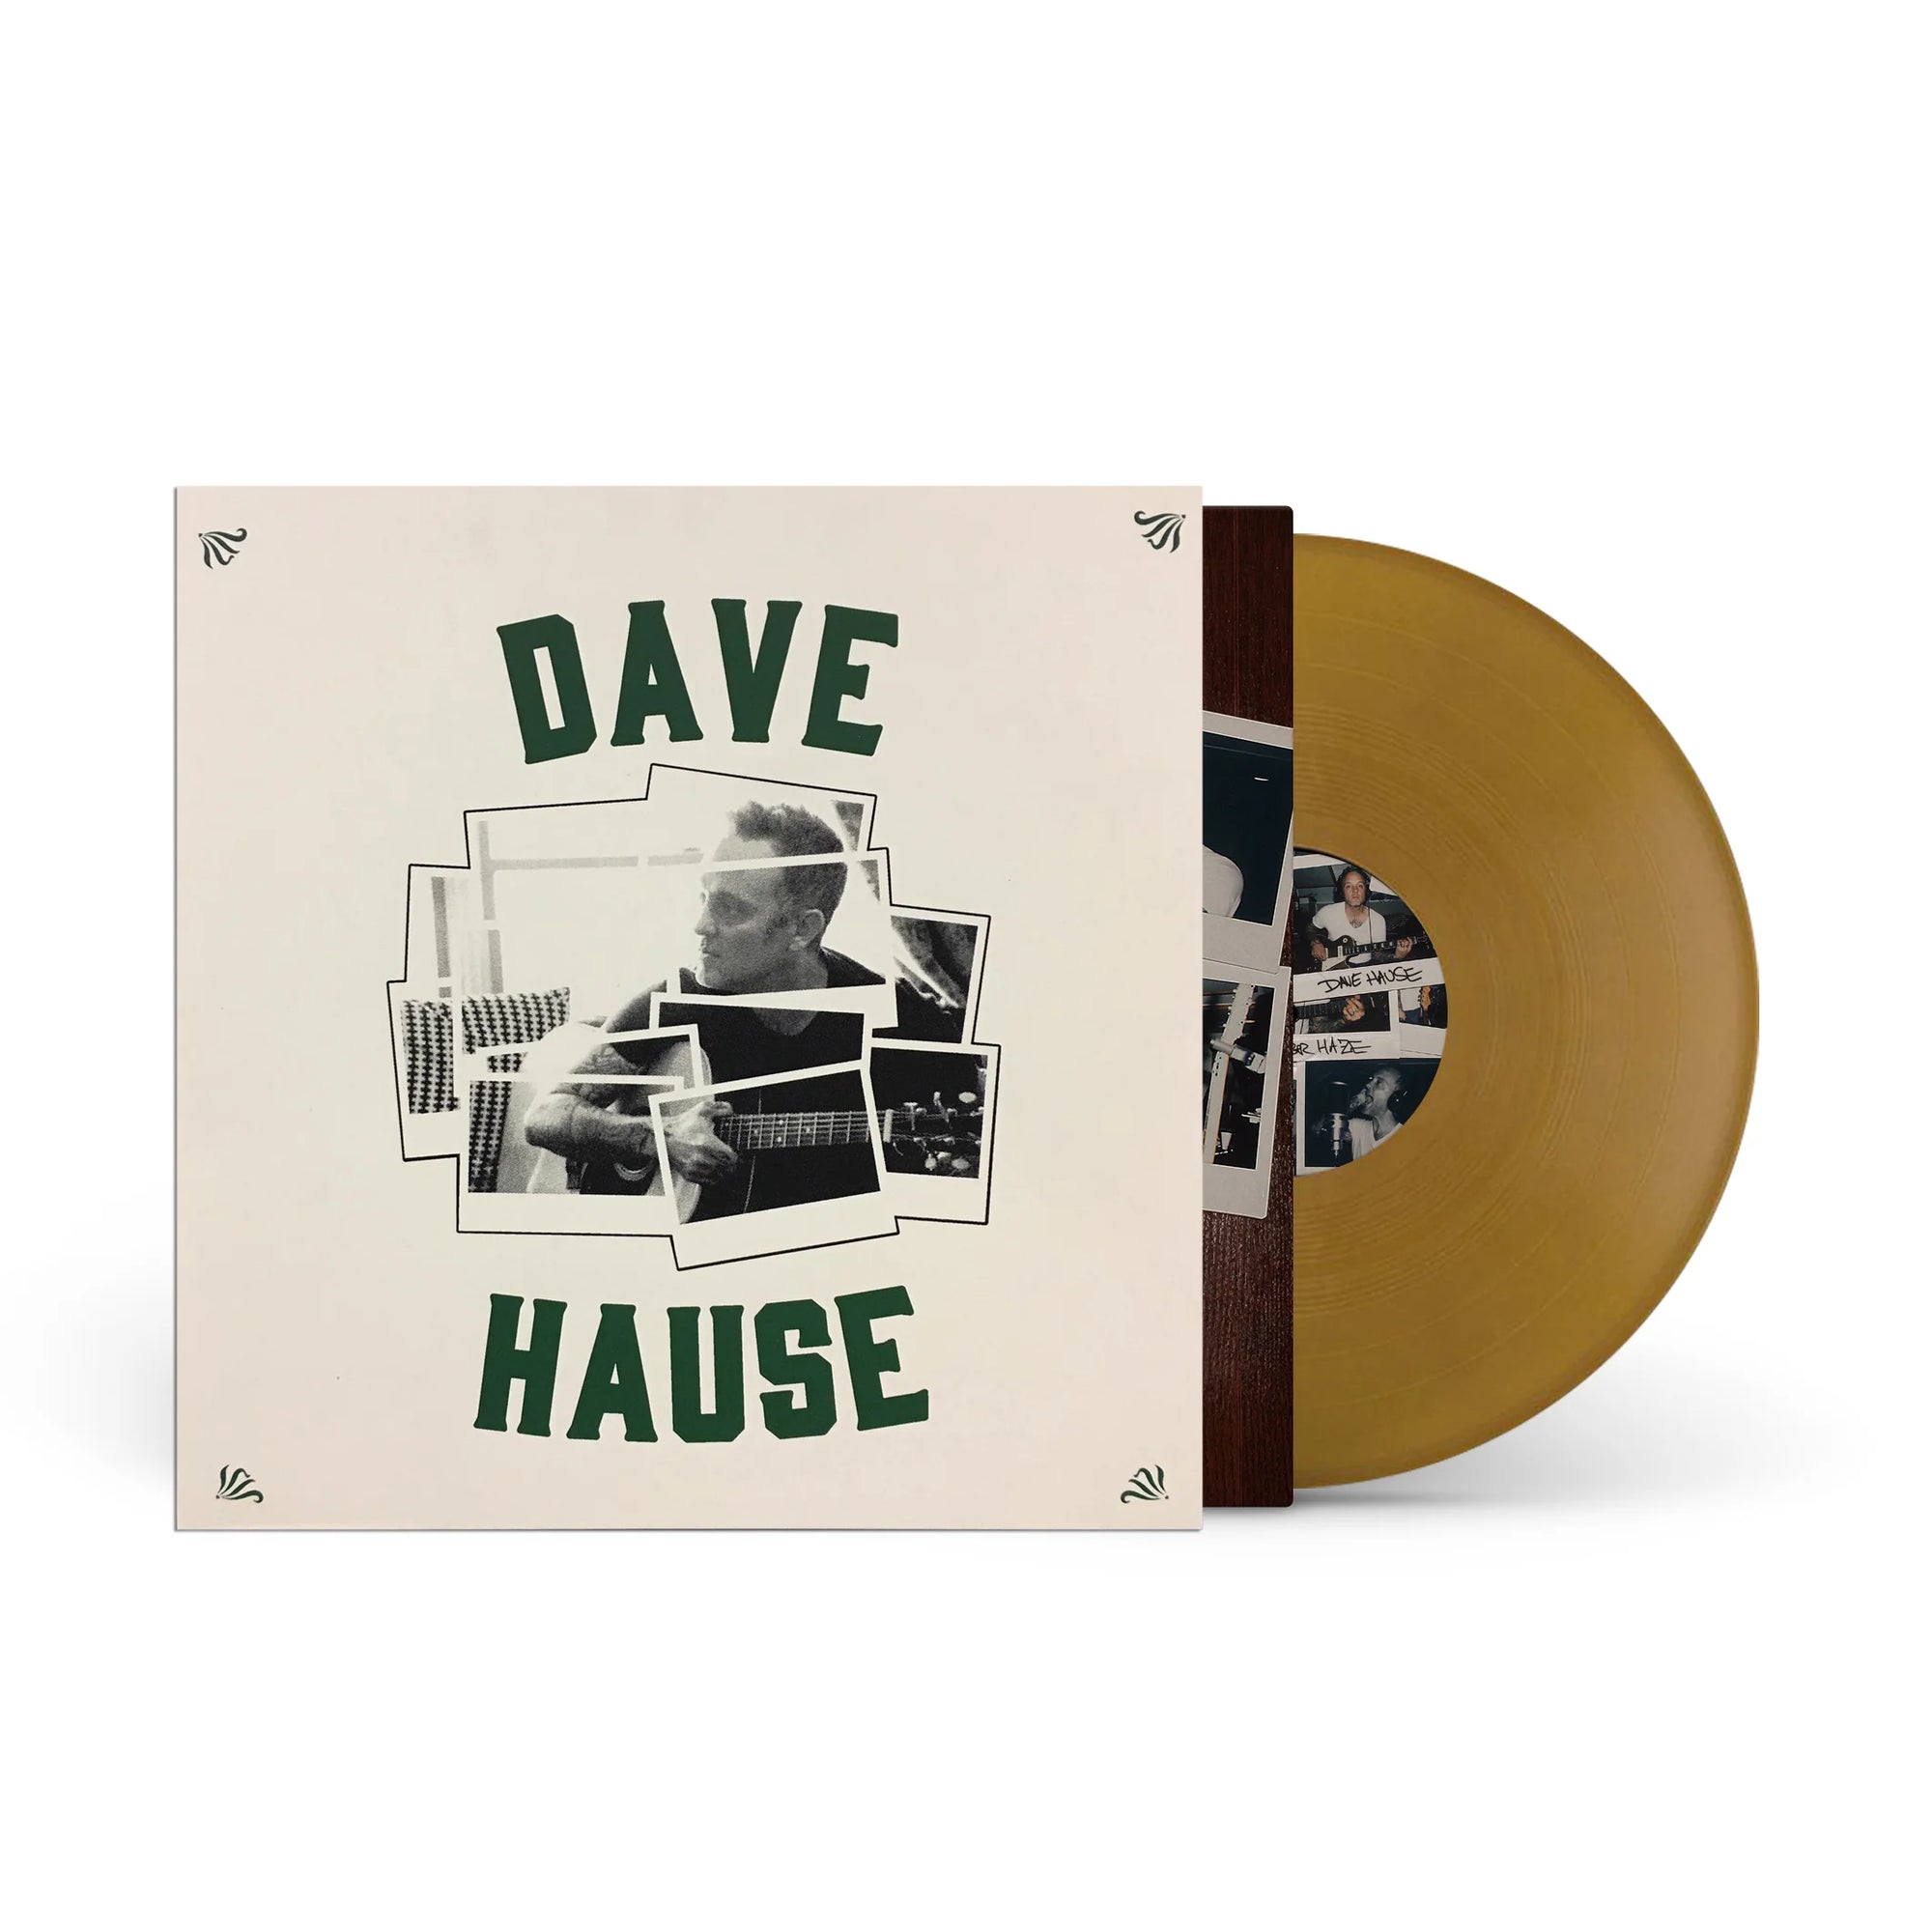 DAVE HAUSE "September Haze" 12"